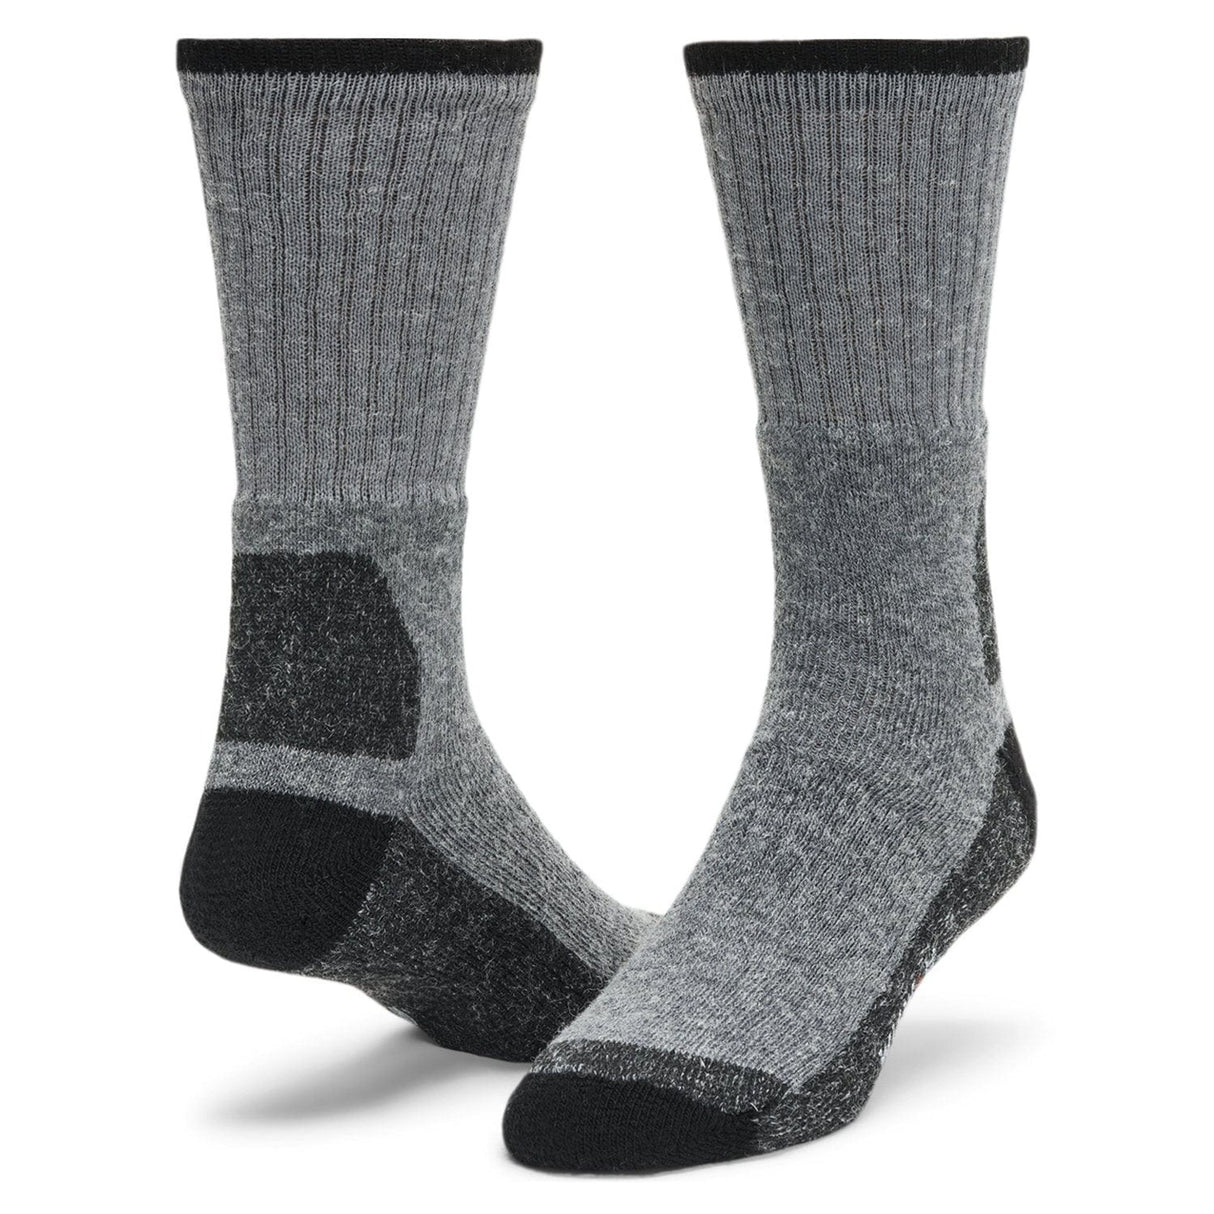 Wigwam At Work Double Duty Crew Socks with Wool 2-Pack  -  Medium / Grey